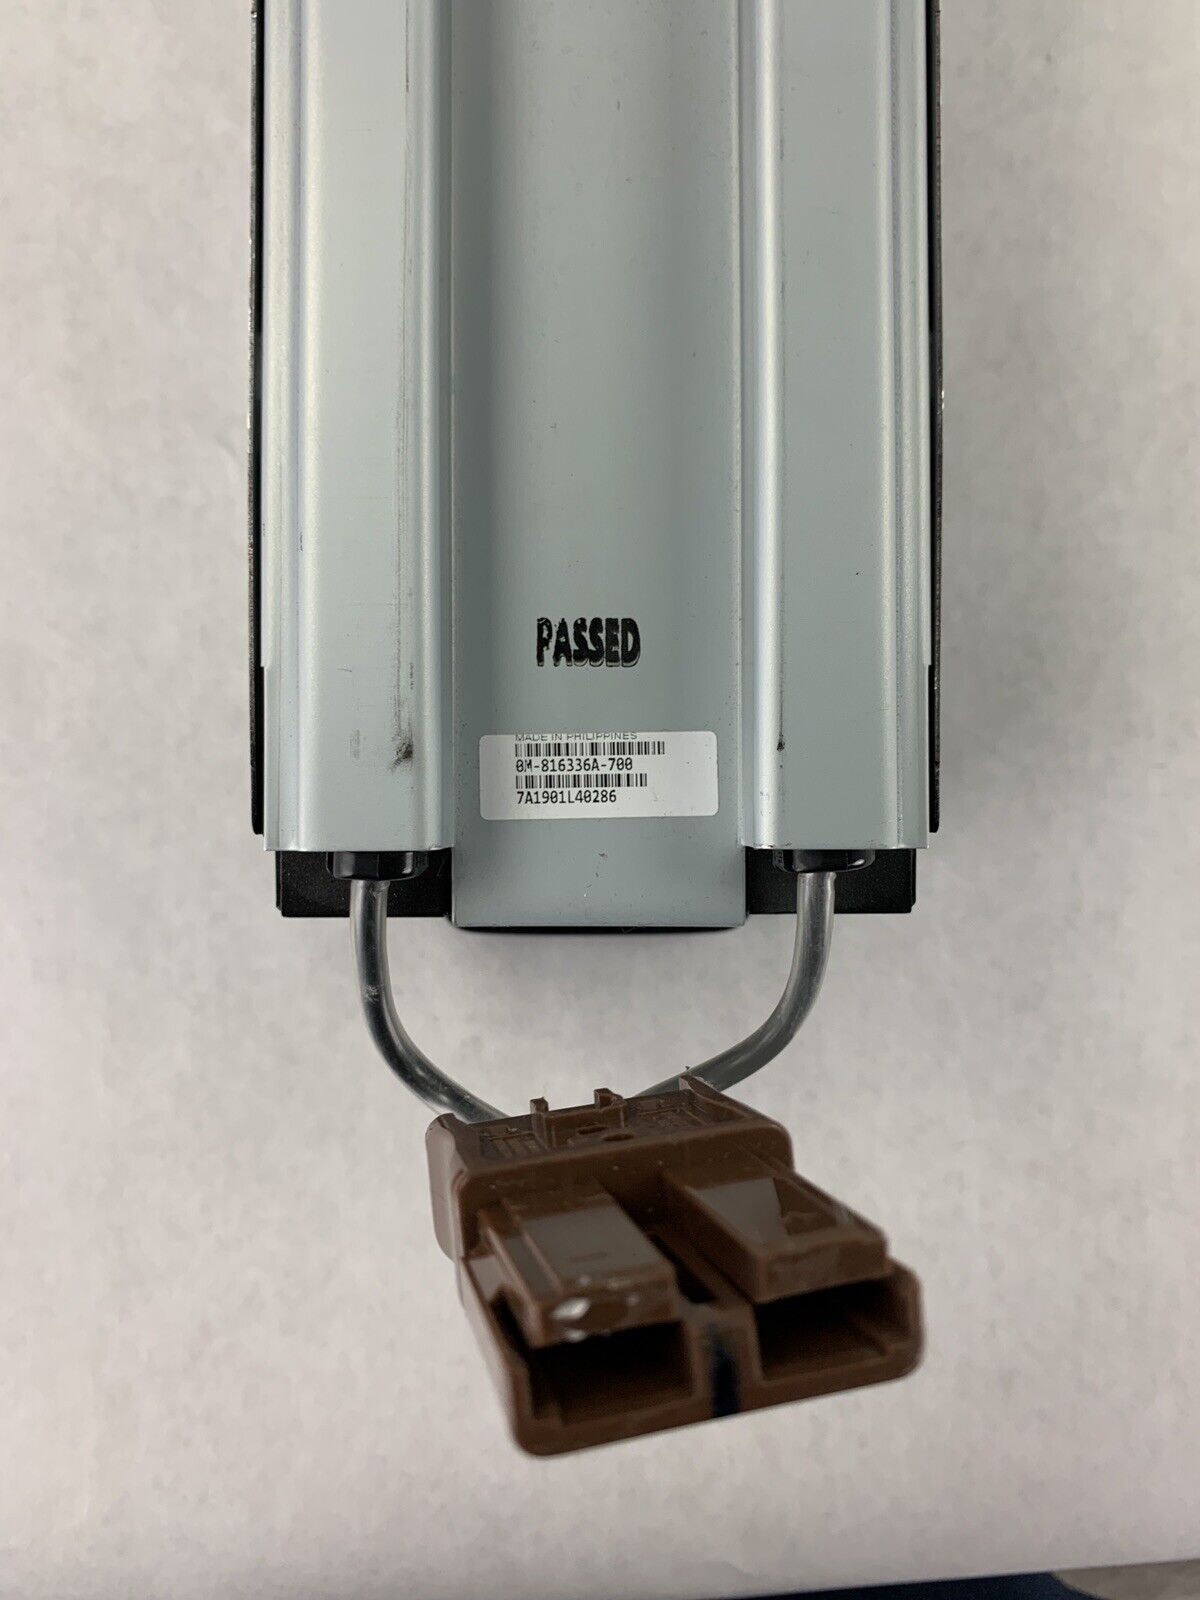 APC Replacement Battery Cartridge No Batteries 0M-1863B 0M-816336A-700